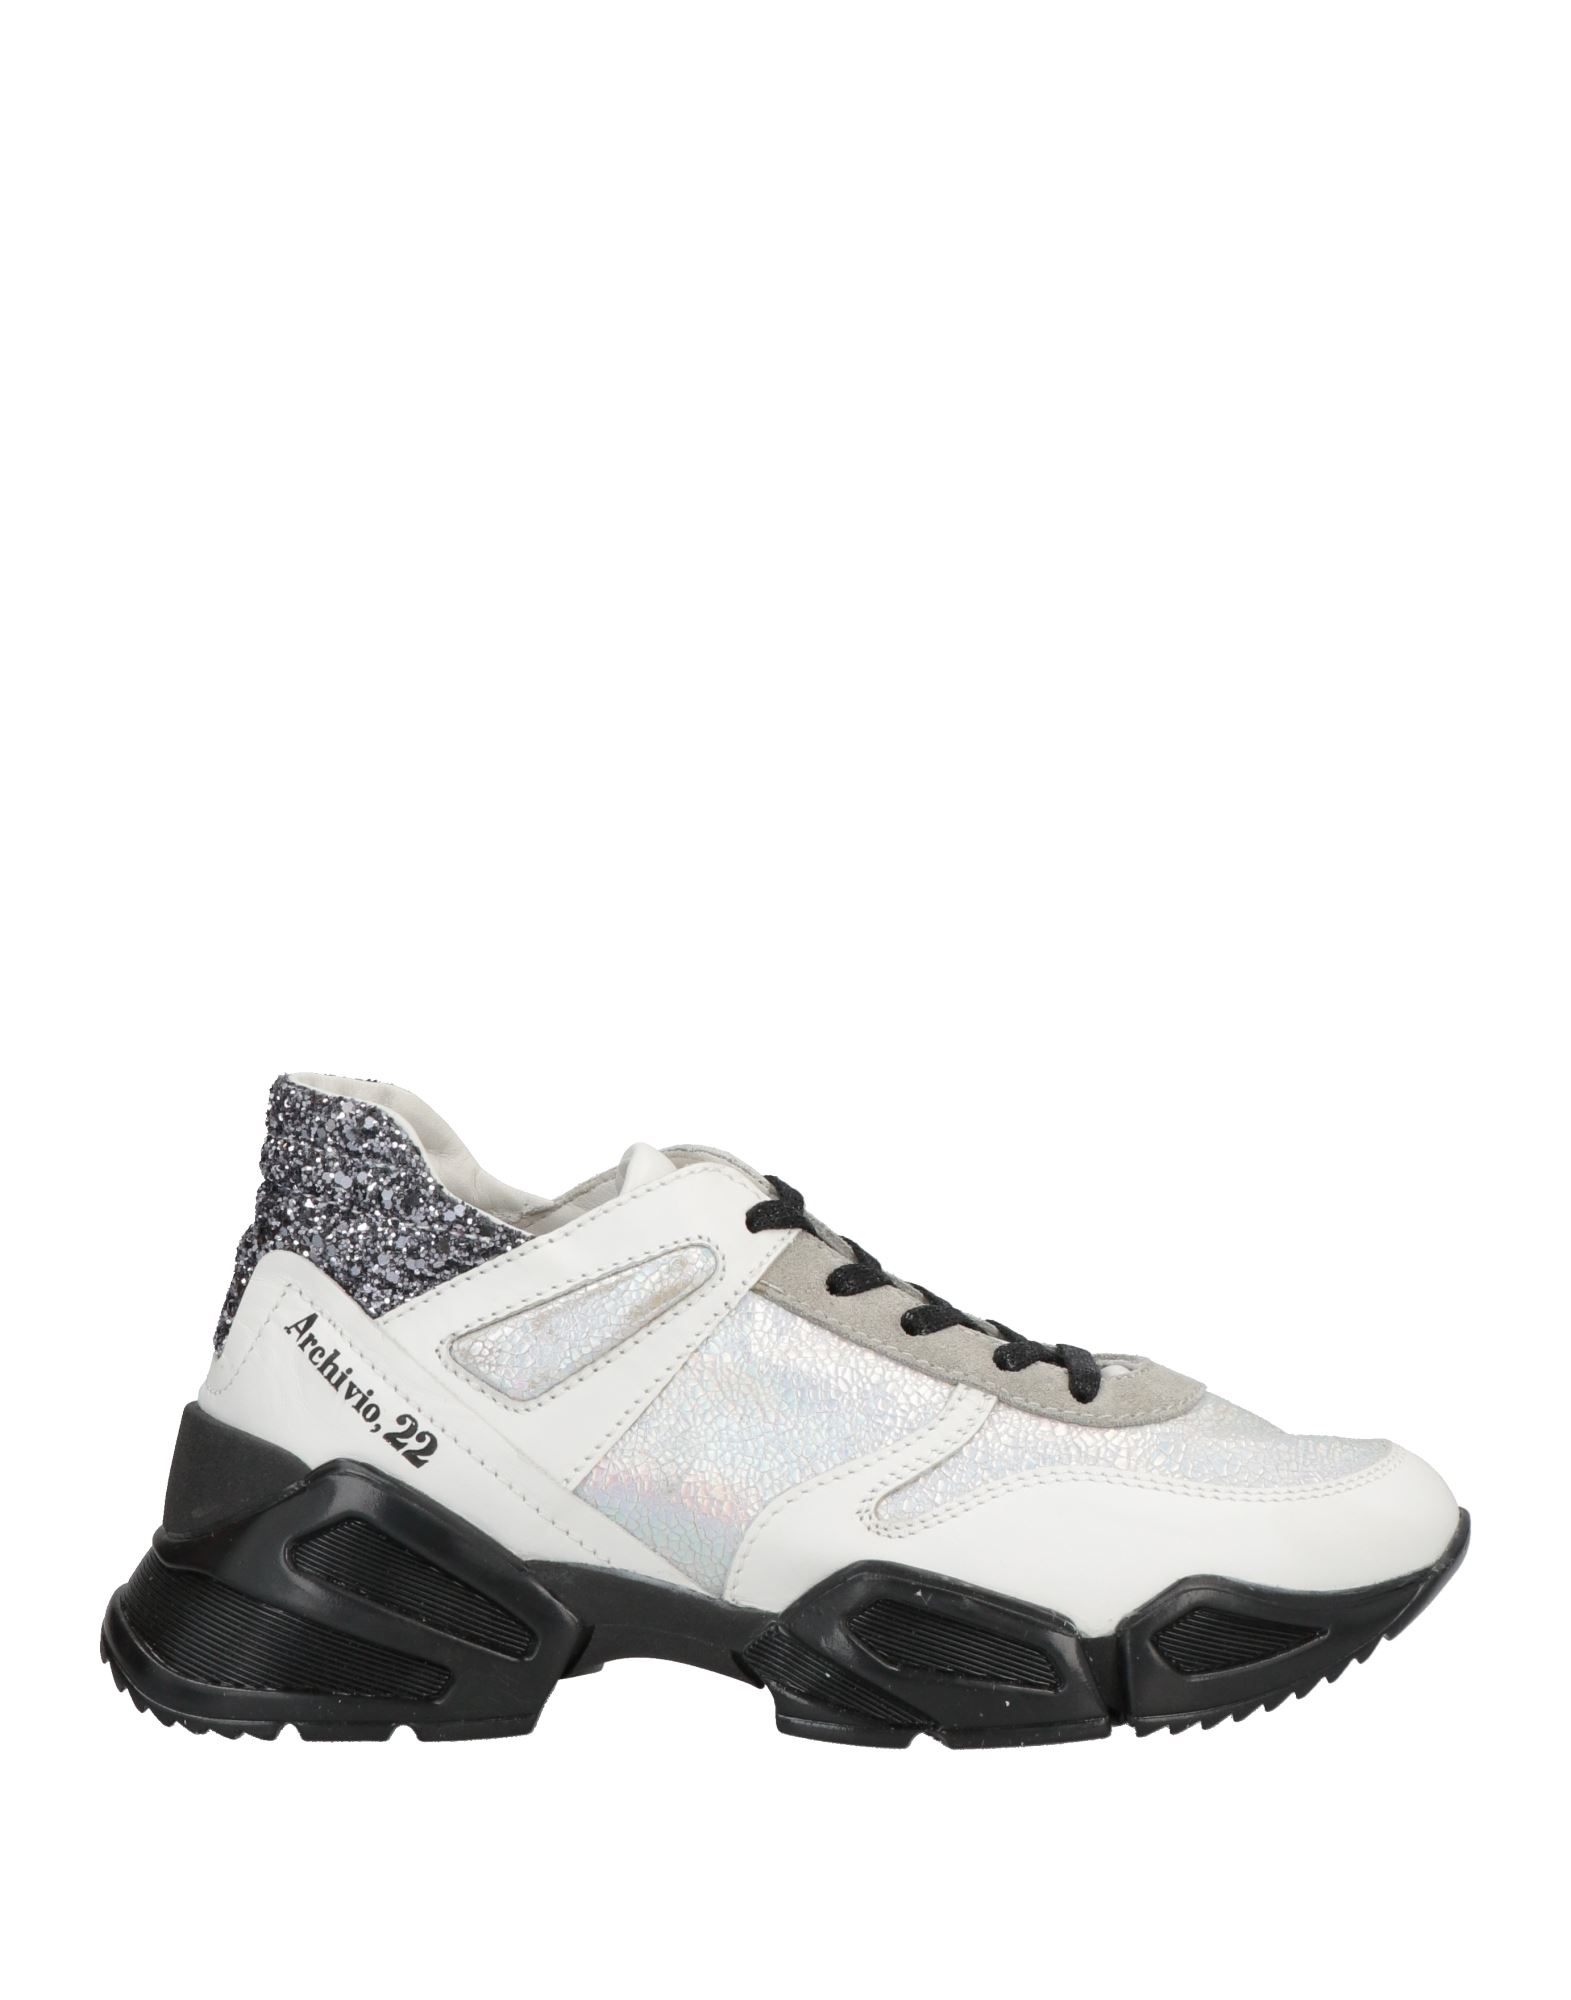 Archivio,22 Sneakers In Light Grey